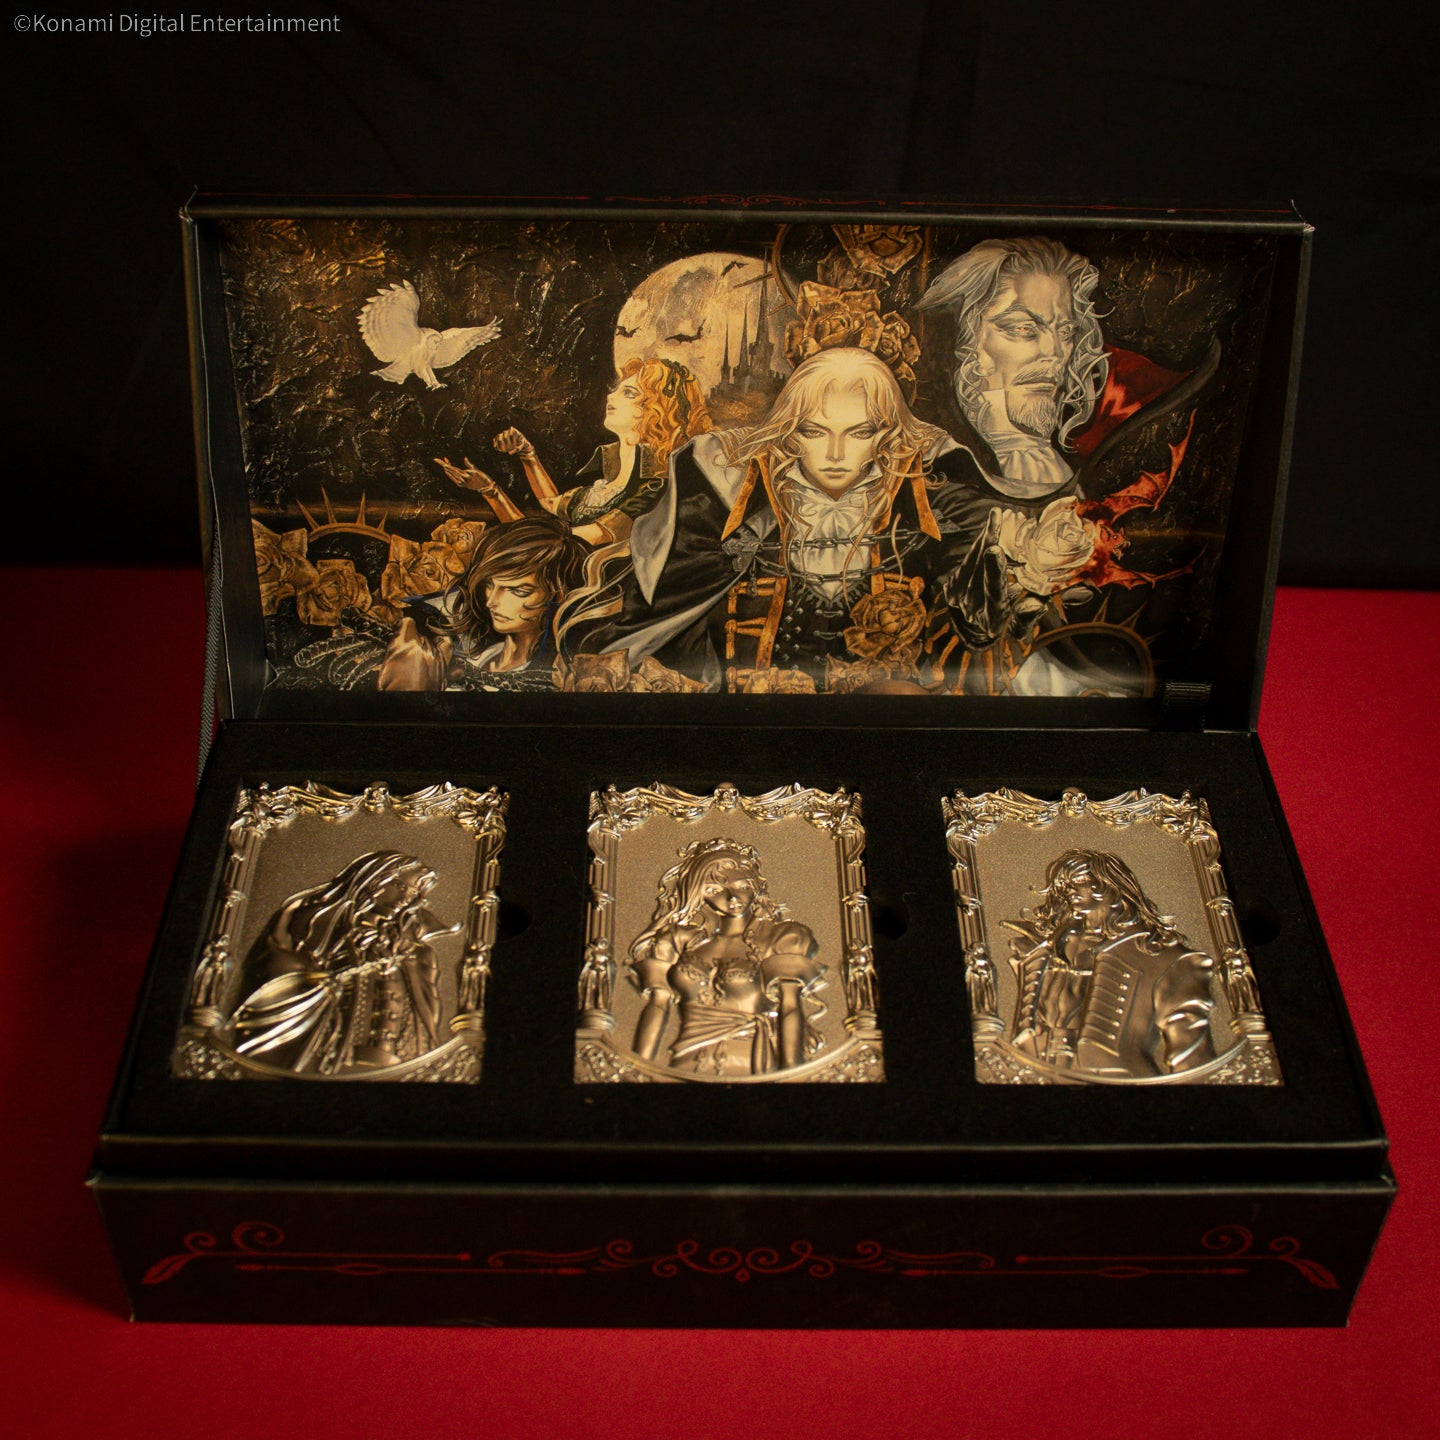 Castlevania limited edition Set of 3 ingots from Fanattik